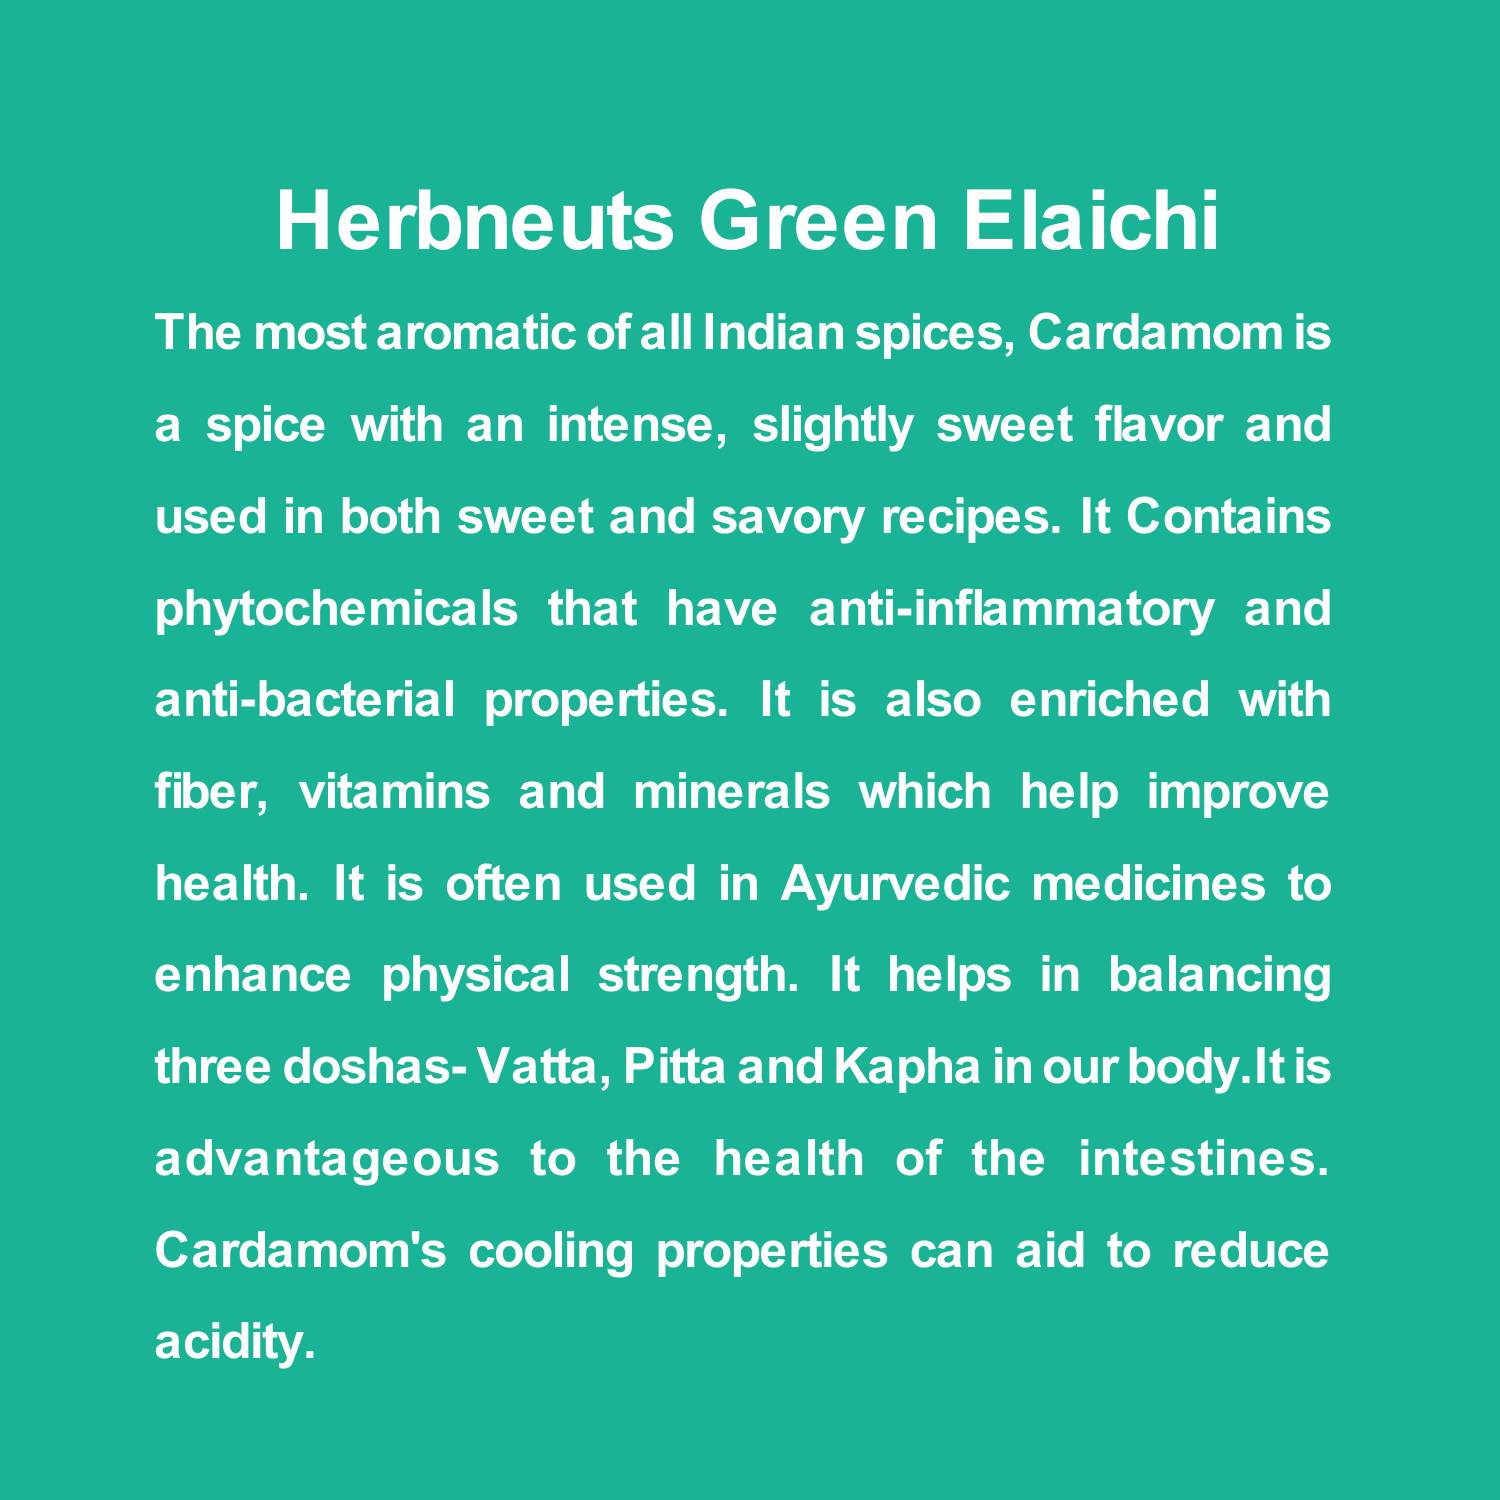 Green Elaichi